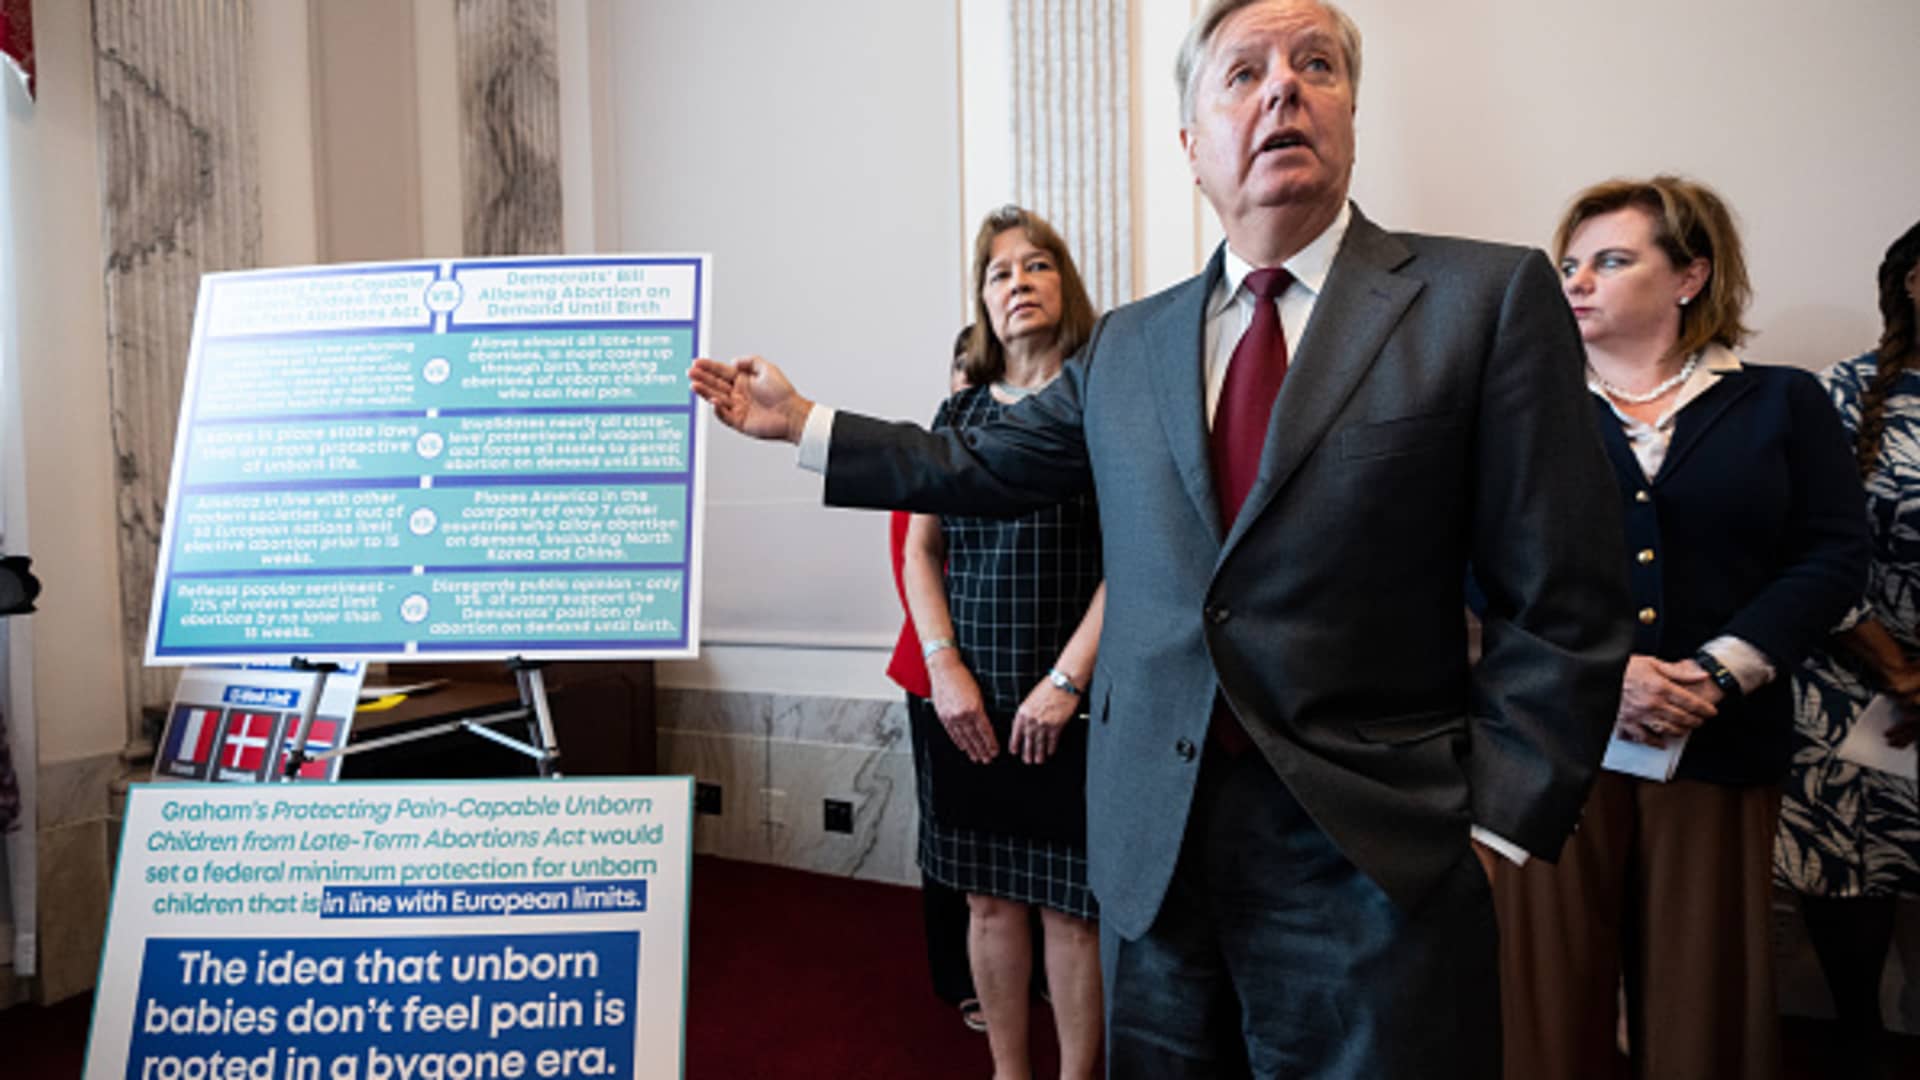 Lindsey Graham abortion ban bill splits GOP on midterm message